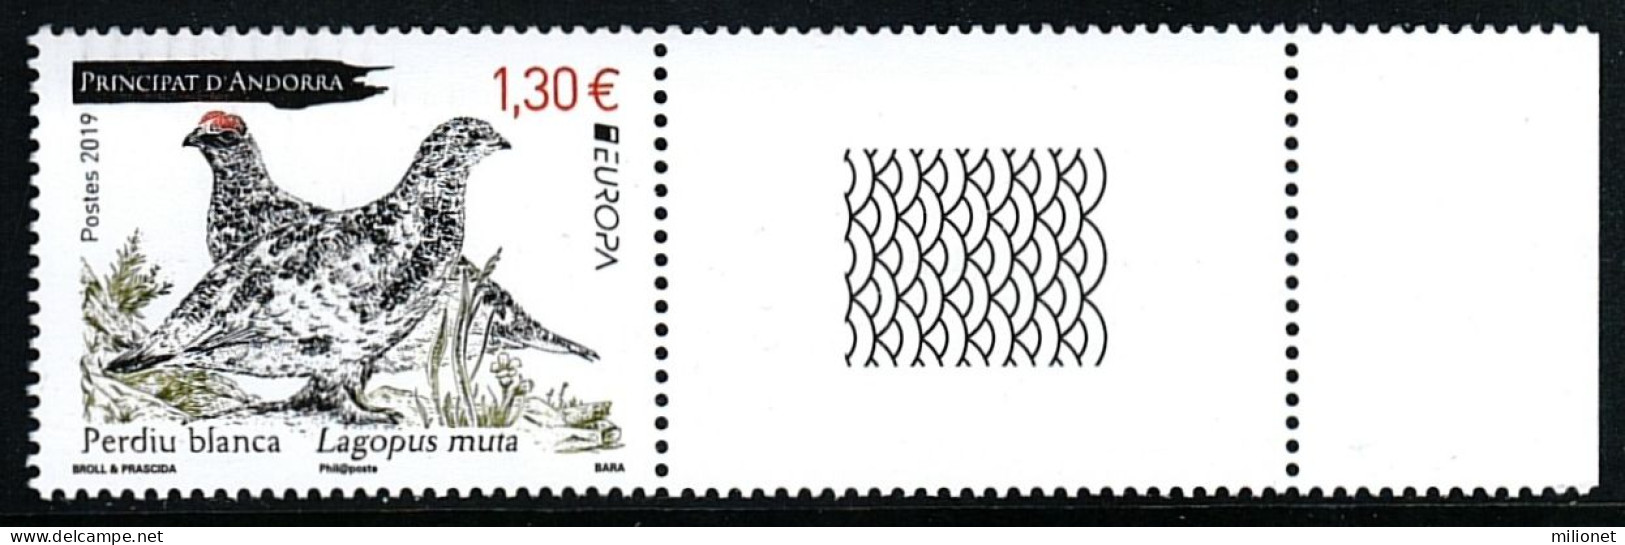 SALE!!! FRENCH ANDORRA ANDORRE 2019 EUROPA CEPT National Birds 1 Stamp + 1 Vignette MNH ** - 2019